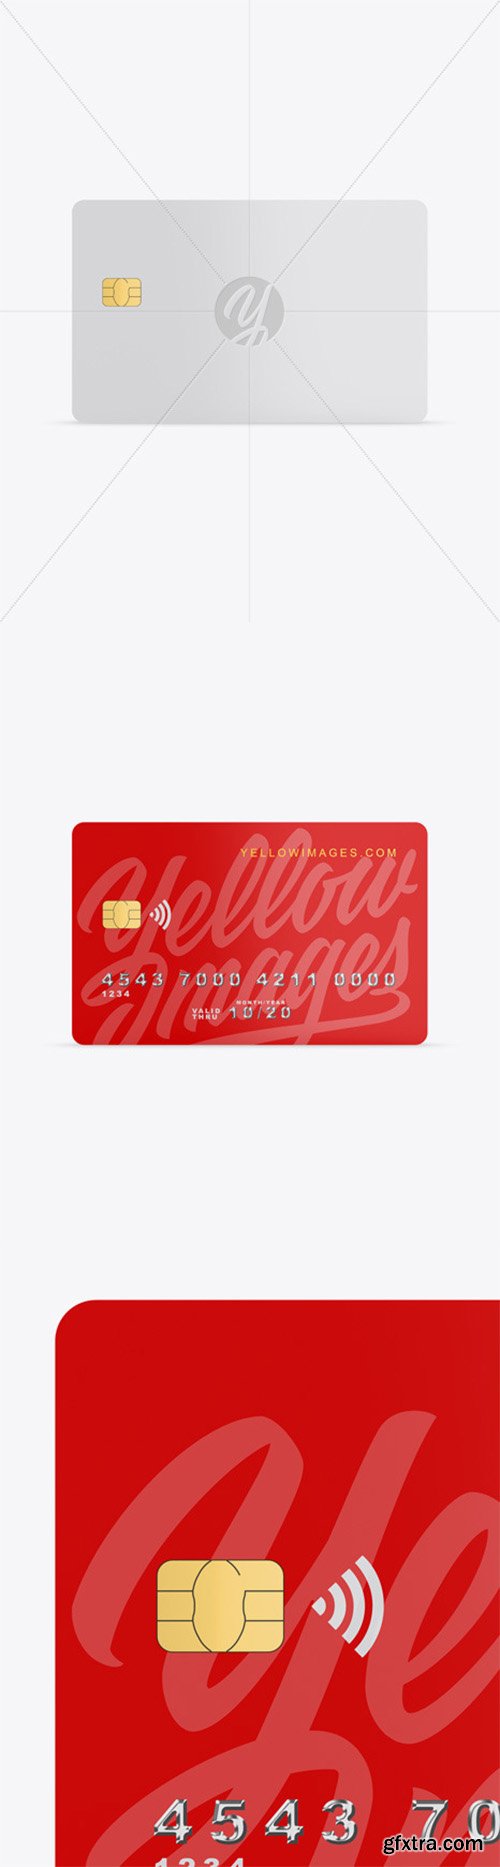 Matte Credit Card Mockup 52586